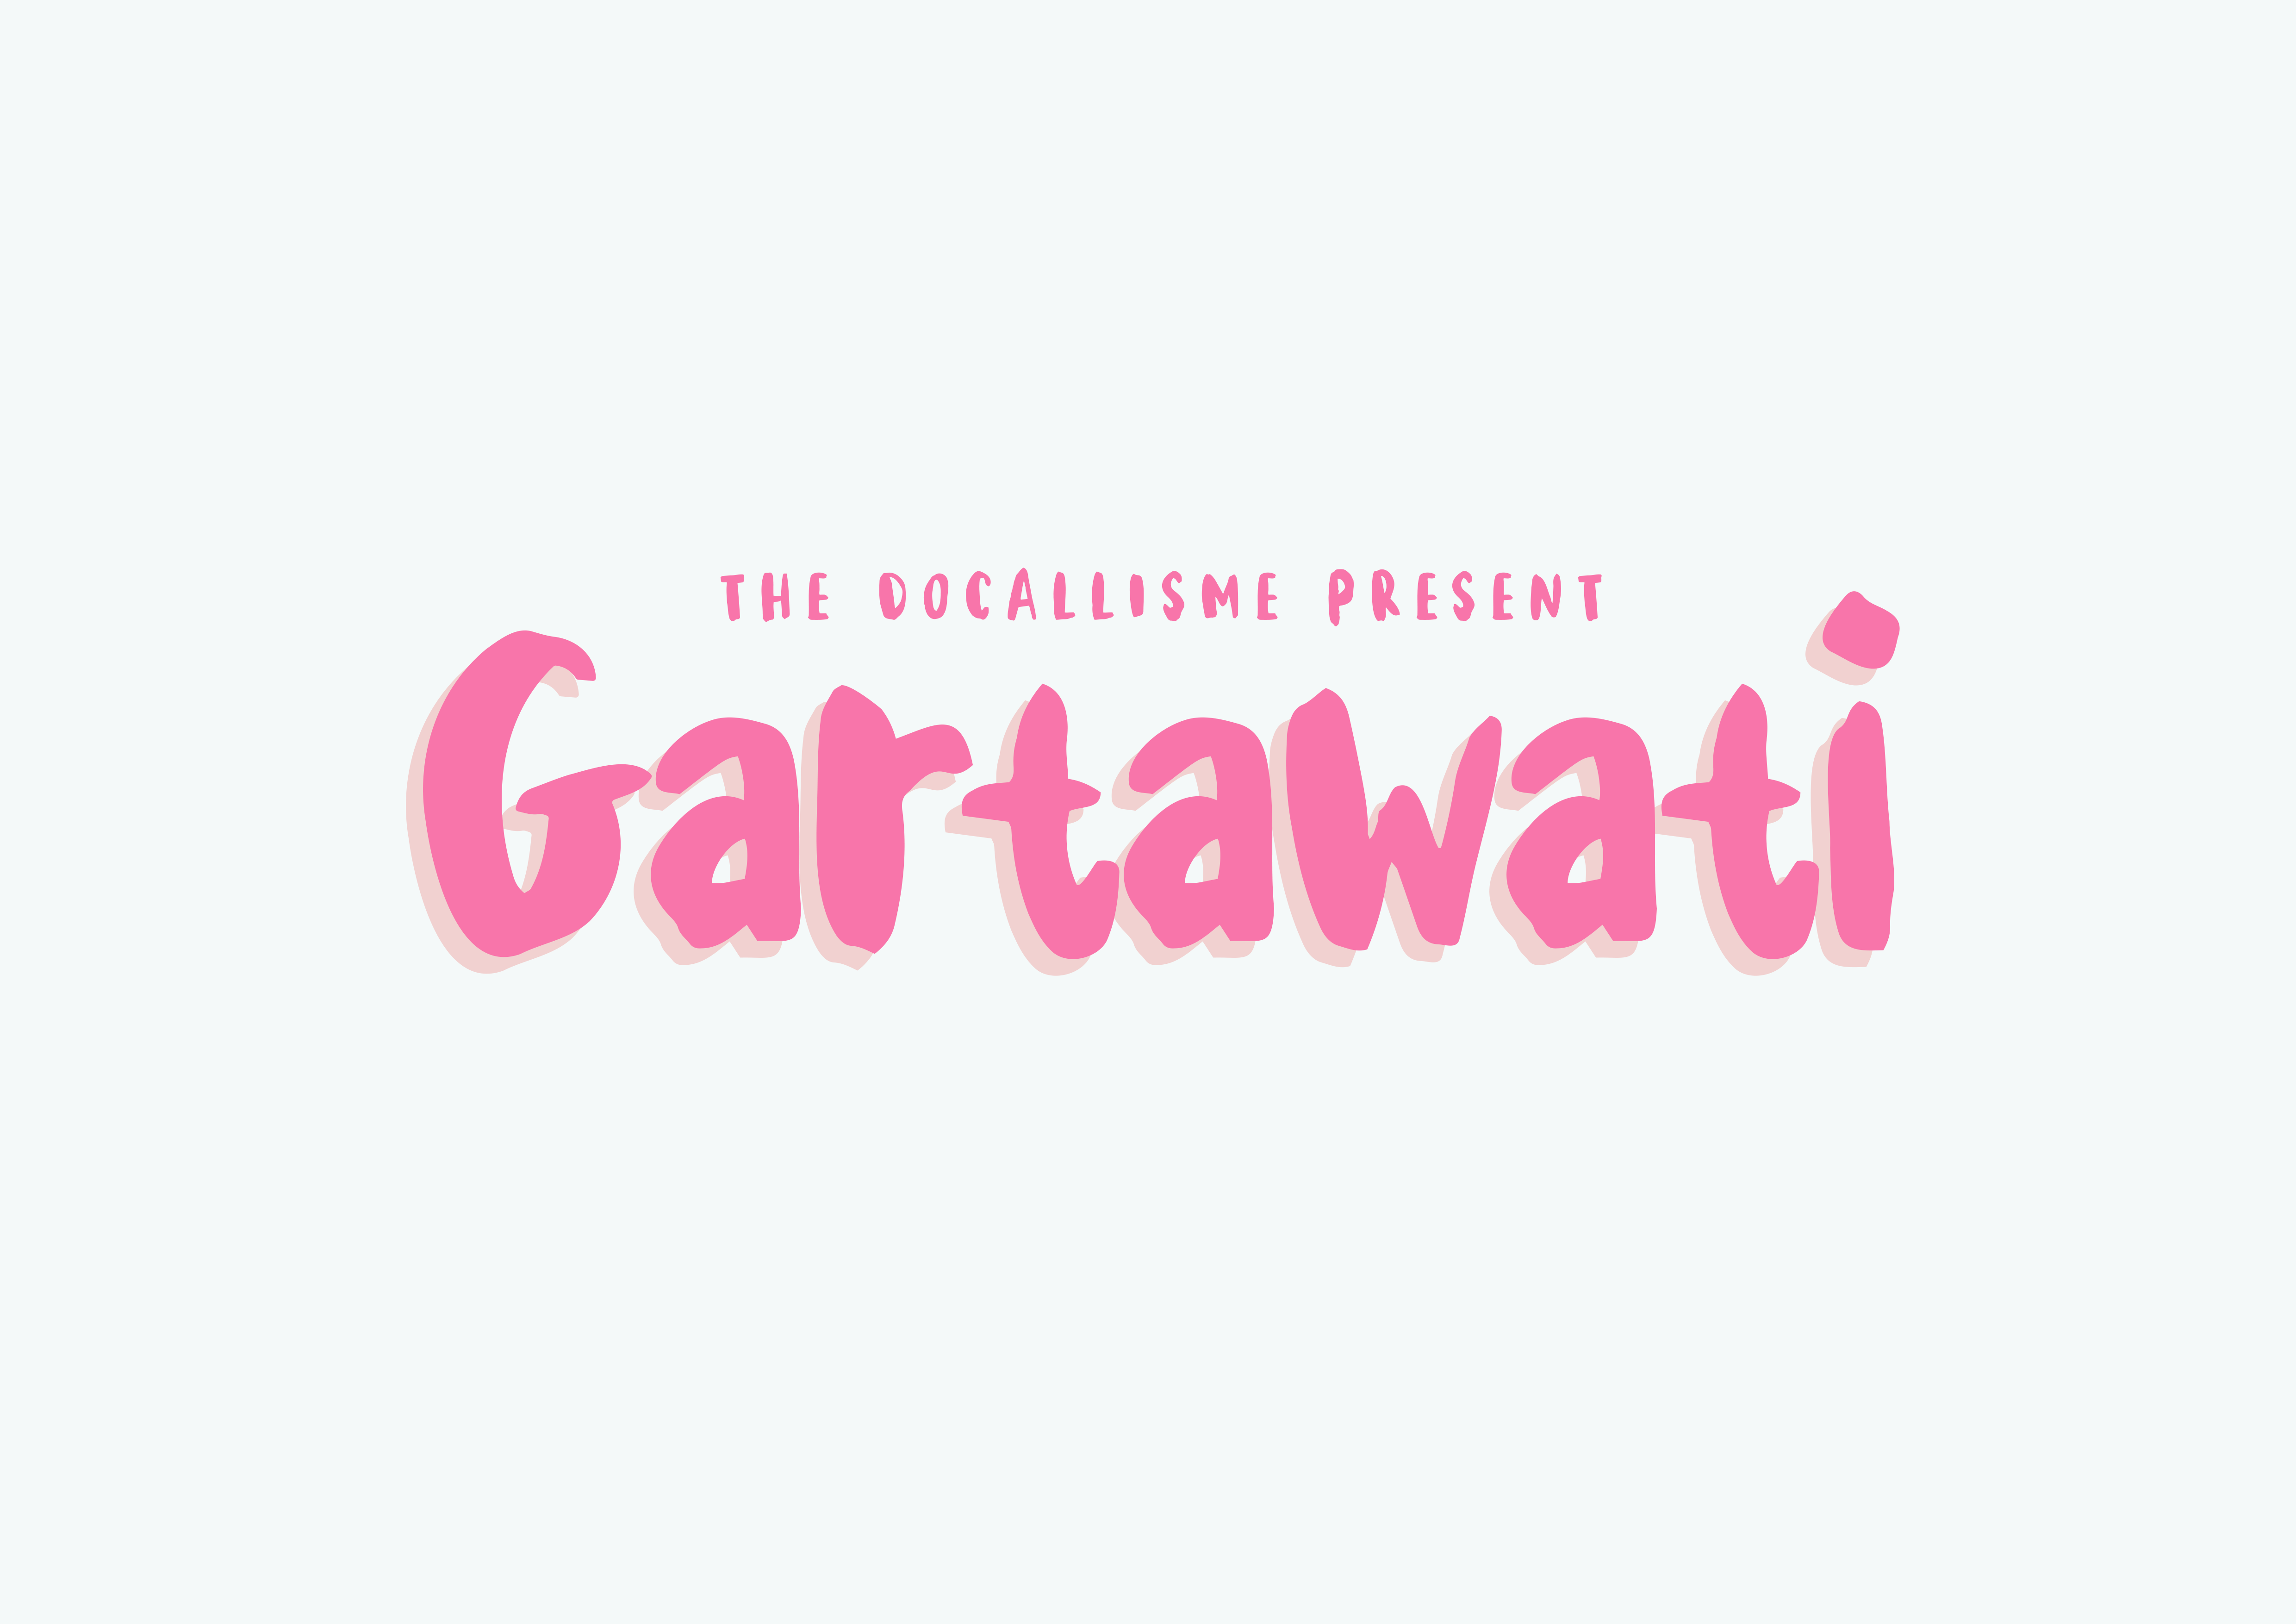 Gartawati